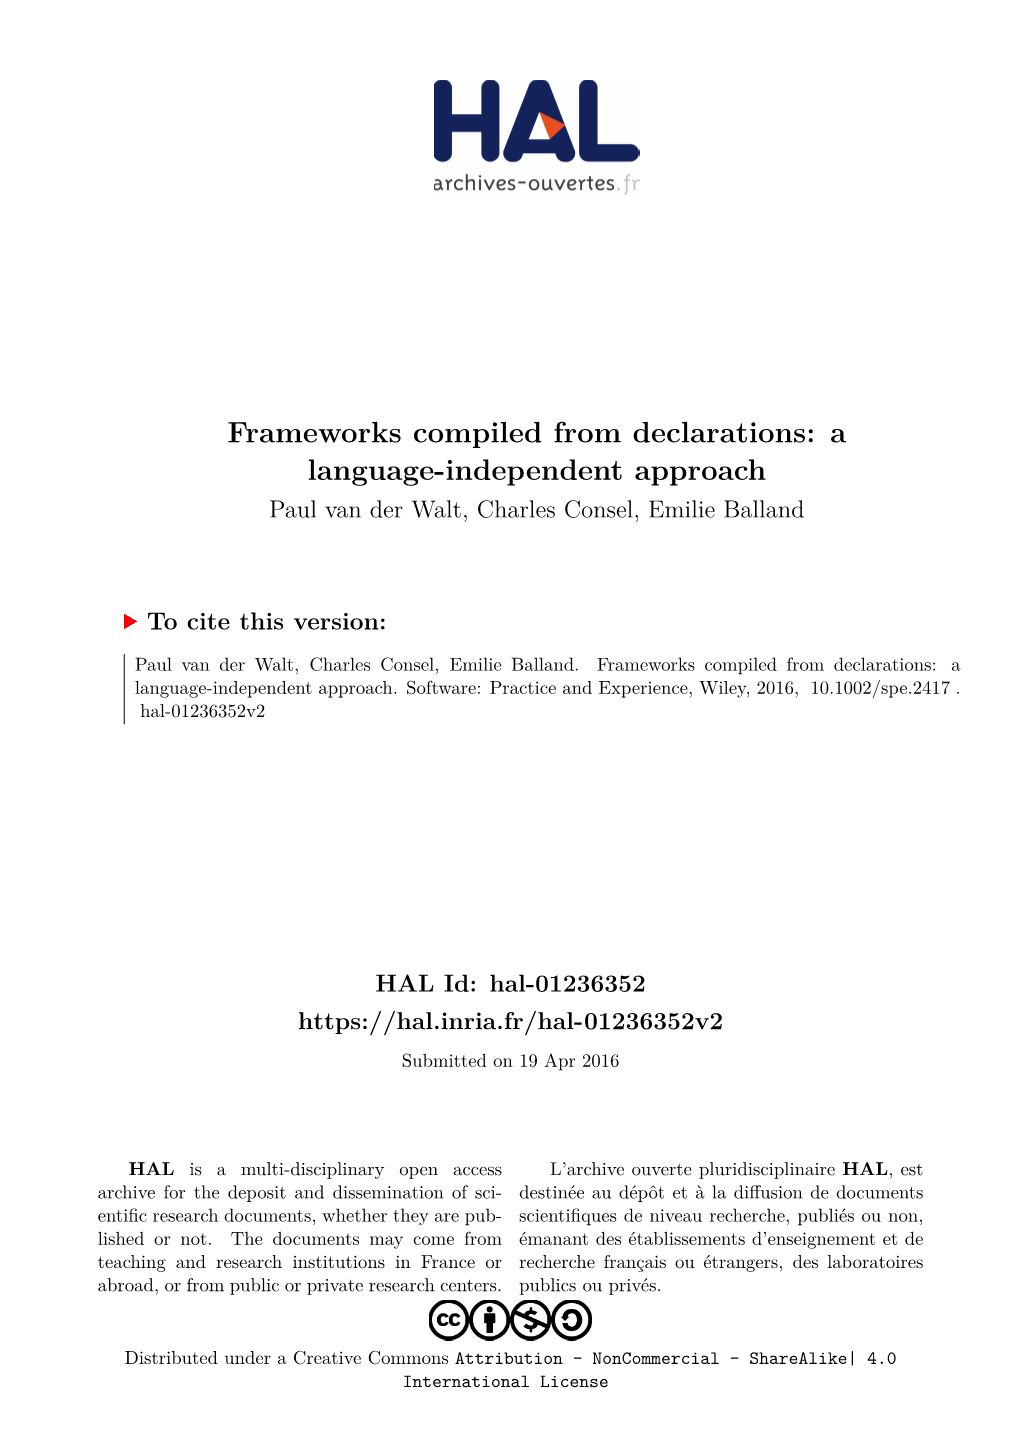 Frameworks Compiled from Declarations: a Language-Independent Approach Paul Van Der Walt, Charles Consel, Emilie Balland